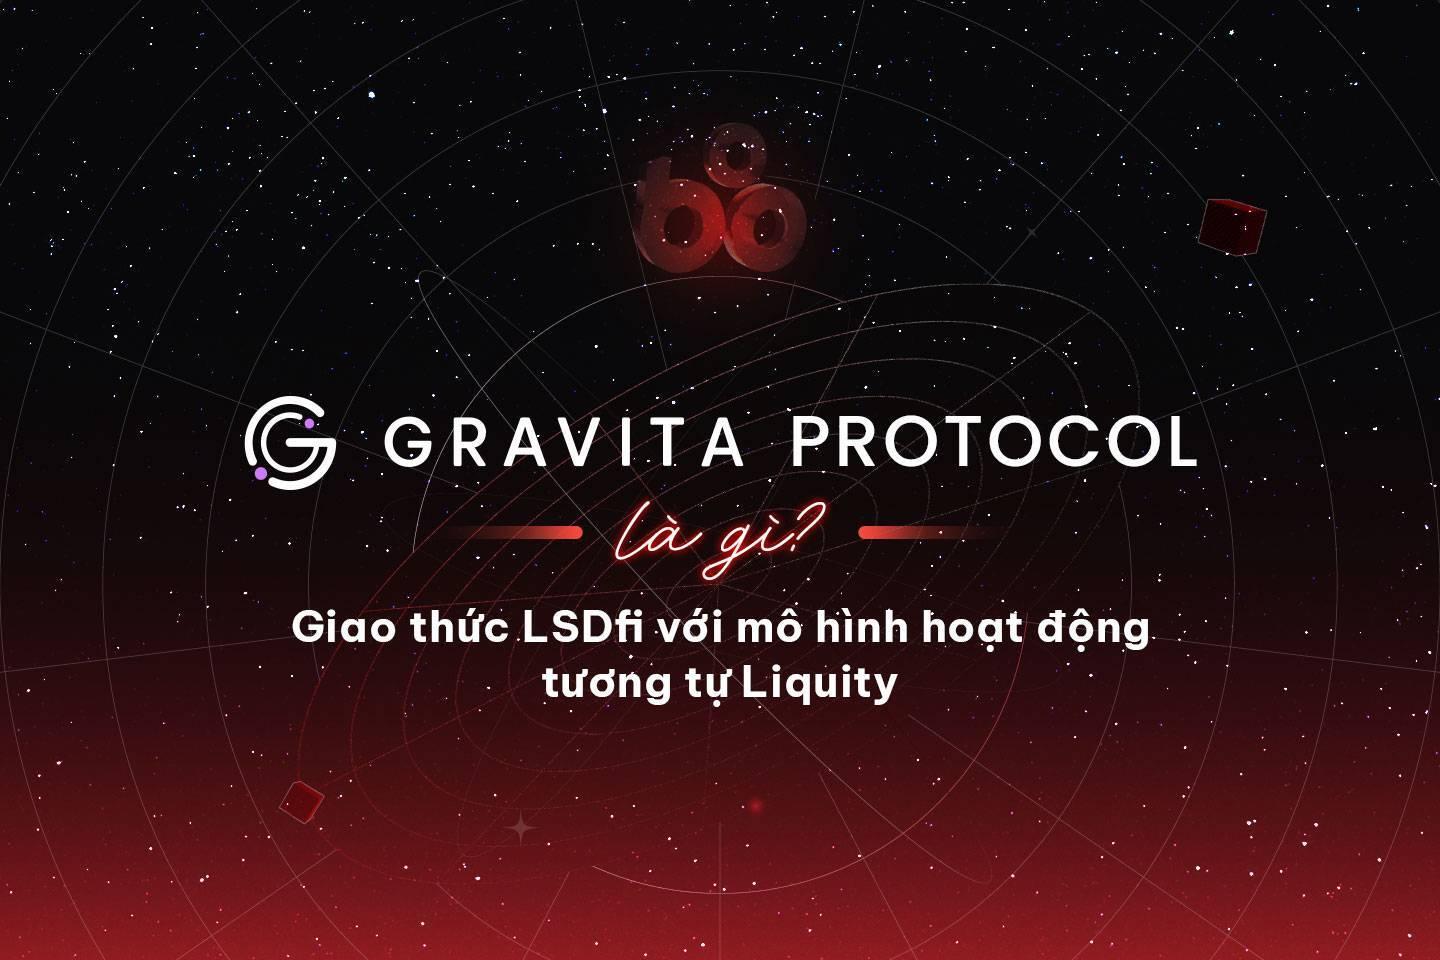 gravita-protocol-la-gi-giao-thuc-lsdfi-voi-mo-hinh-hoat-dong-tuong-tu-liquity